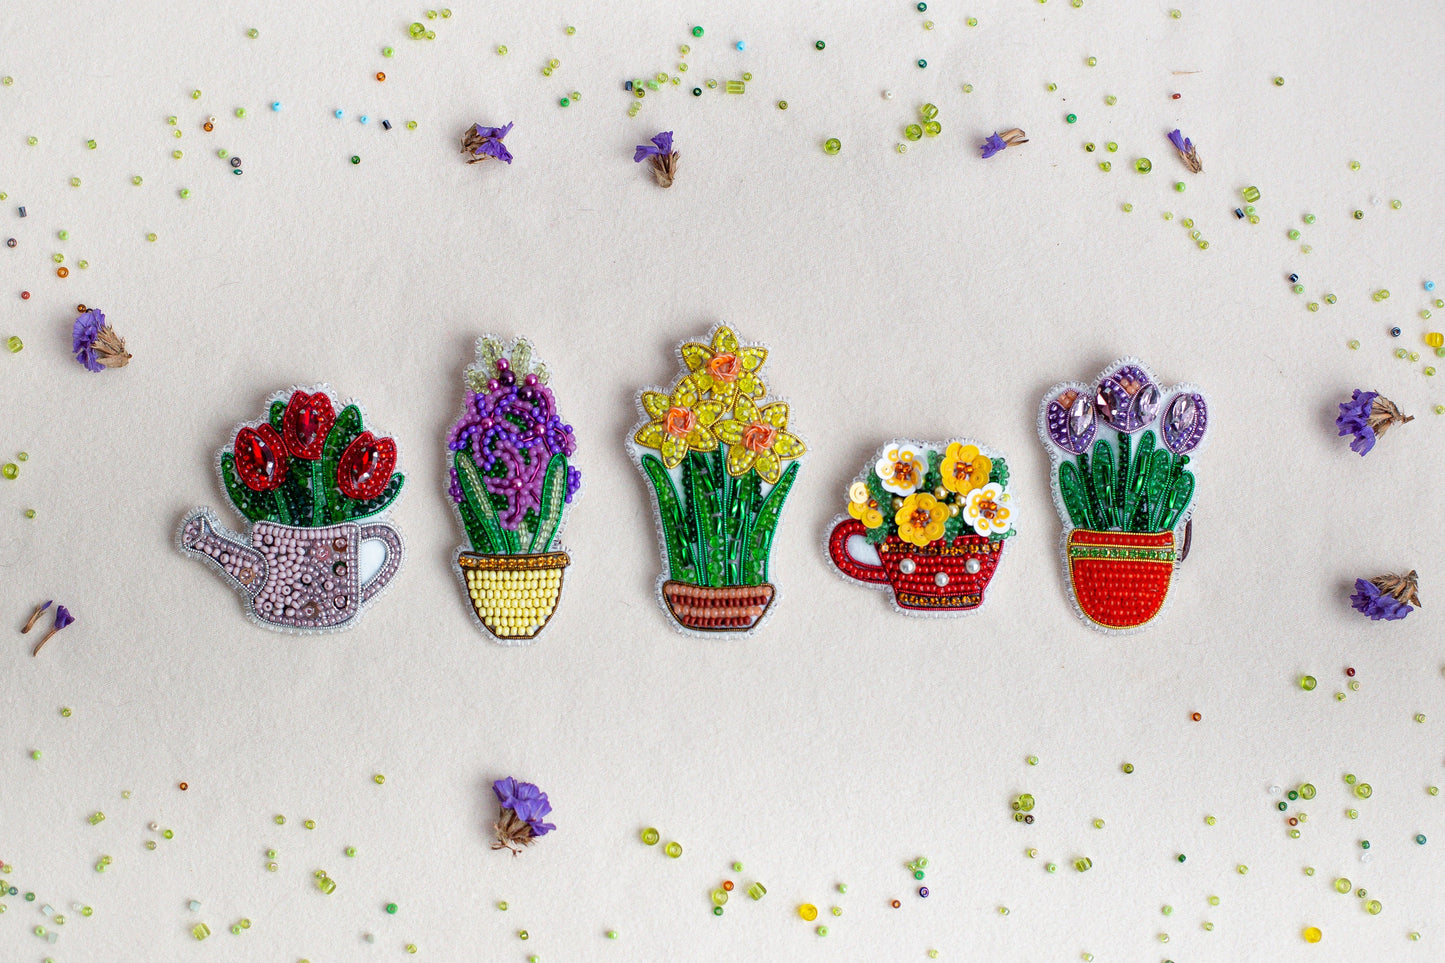 Daffodil Bead embroidery kit. Seed Bead Brooch kit. DIY Craft kit. Beadweaving Kit. Needlework beading. Handmade Jewelry Making Kit